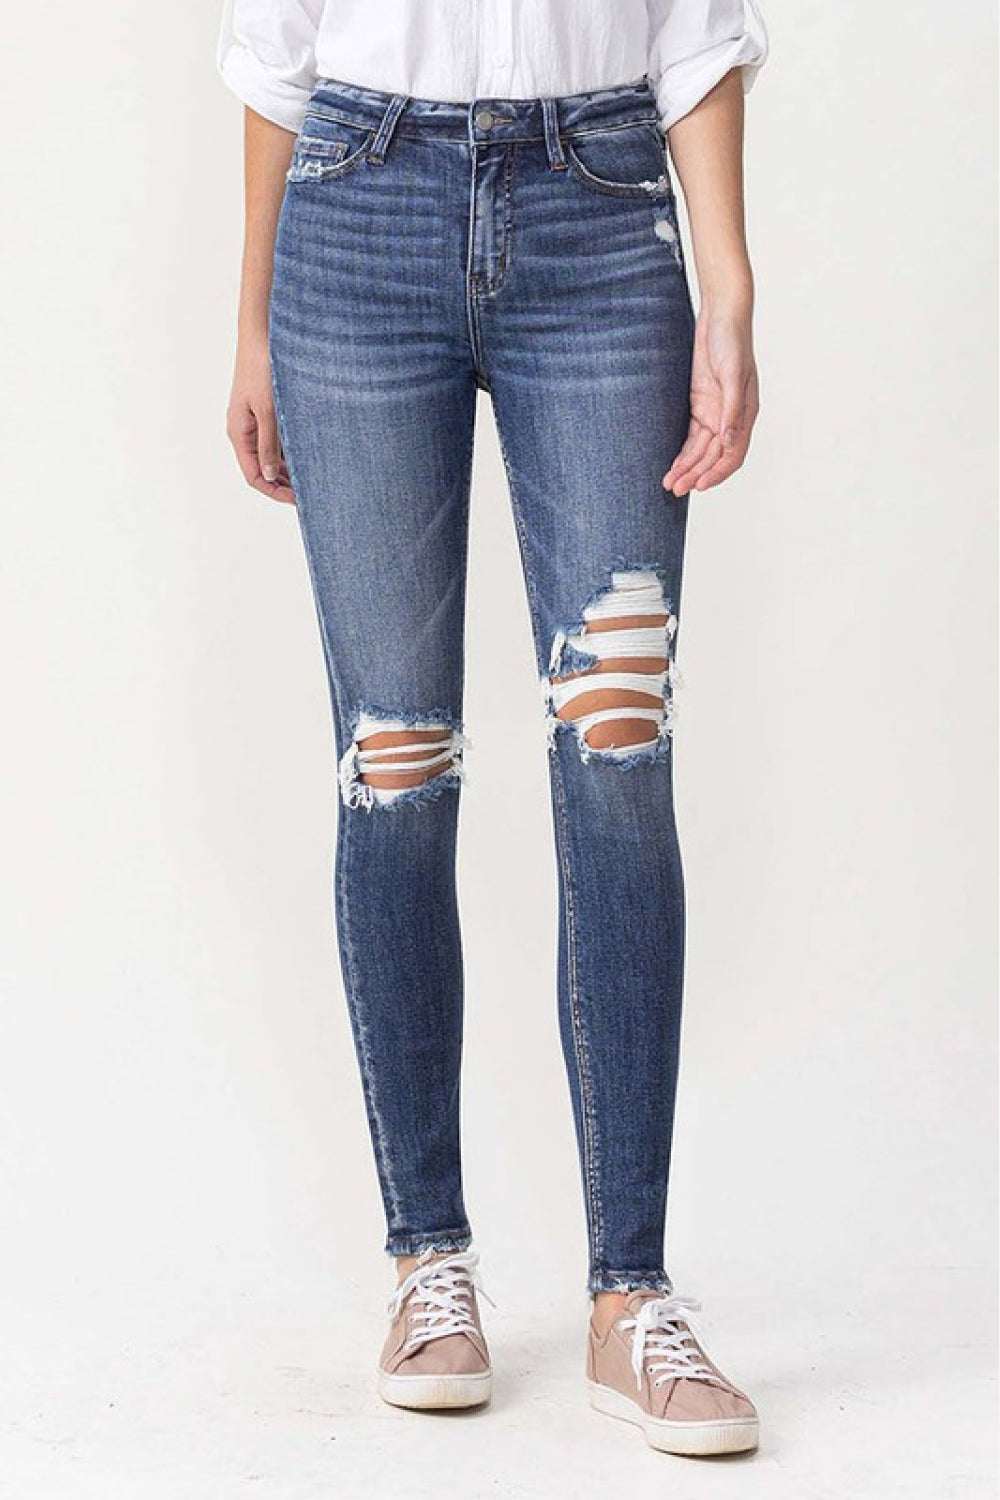 LOVERVET by Vervet High Rise Destroyed Skinny Jeans